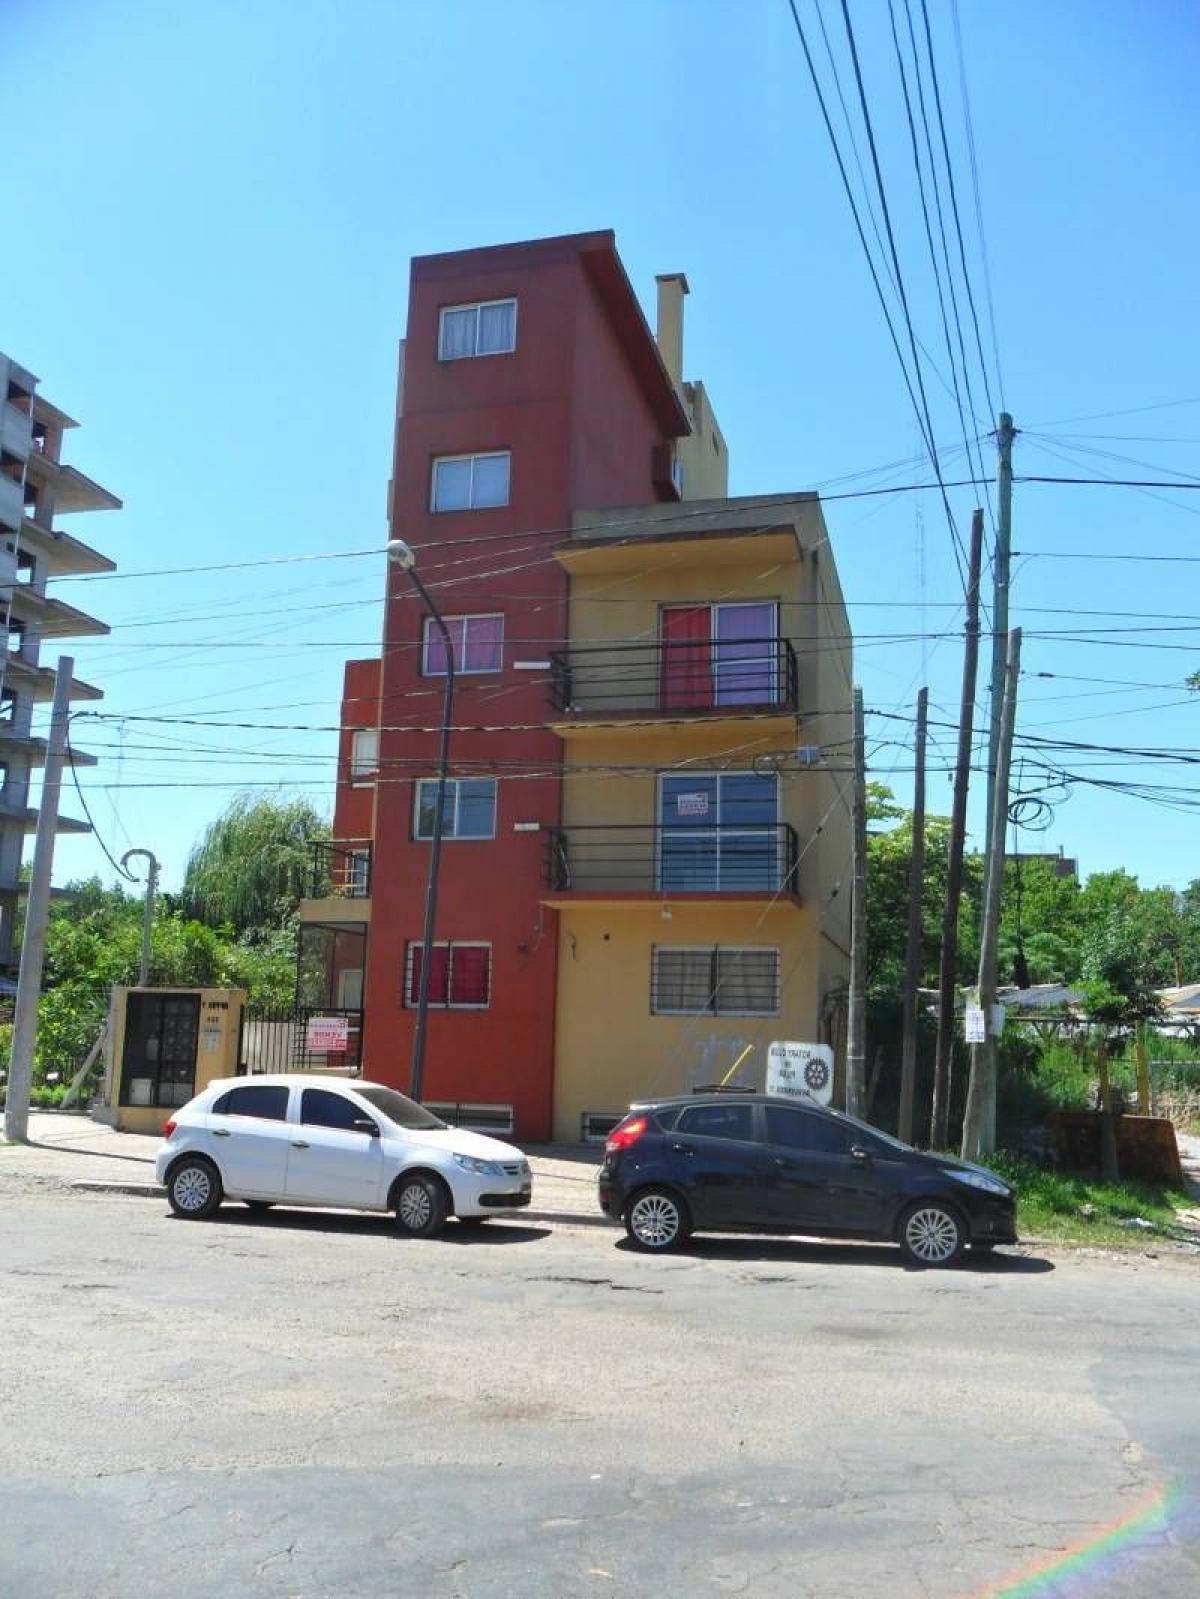 Picture of Apartment Building For Sale in Pilar, Santa Fe, Argentina